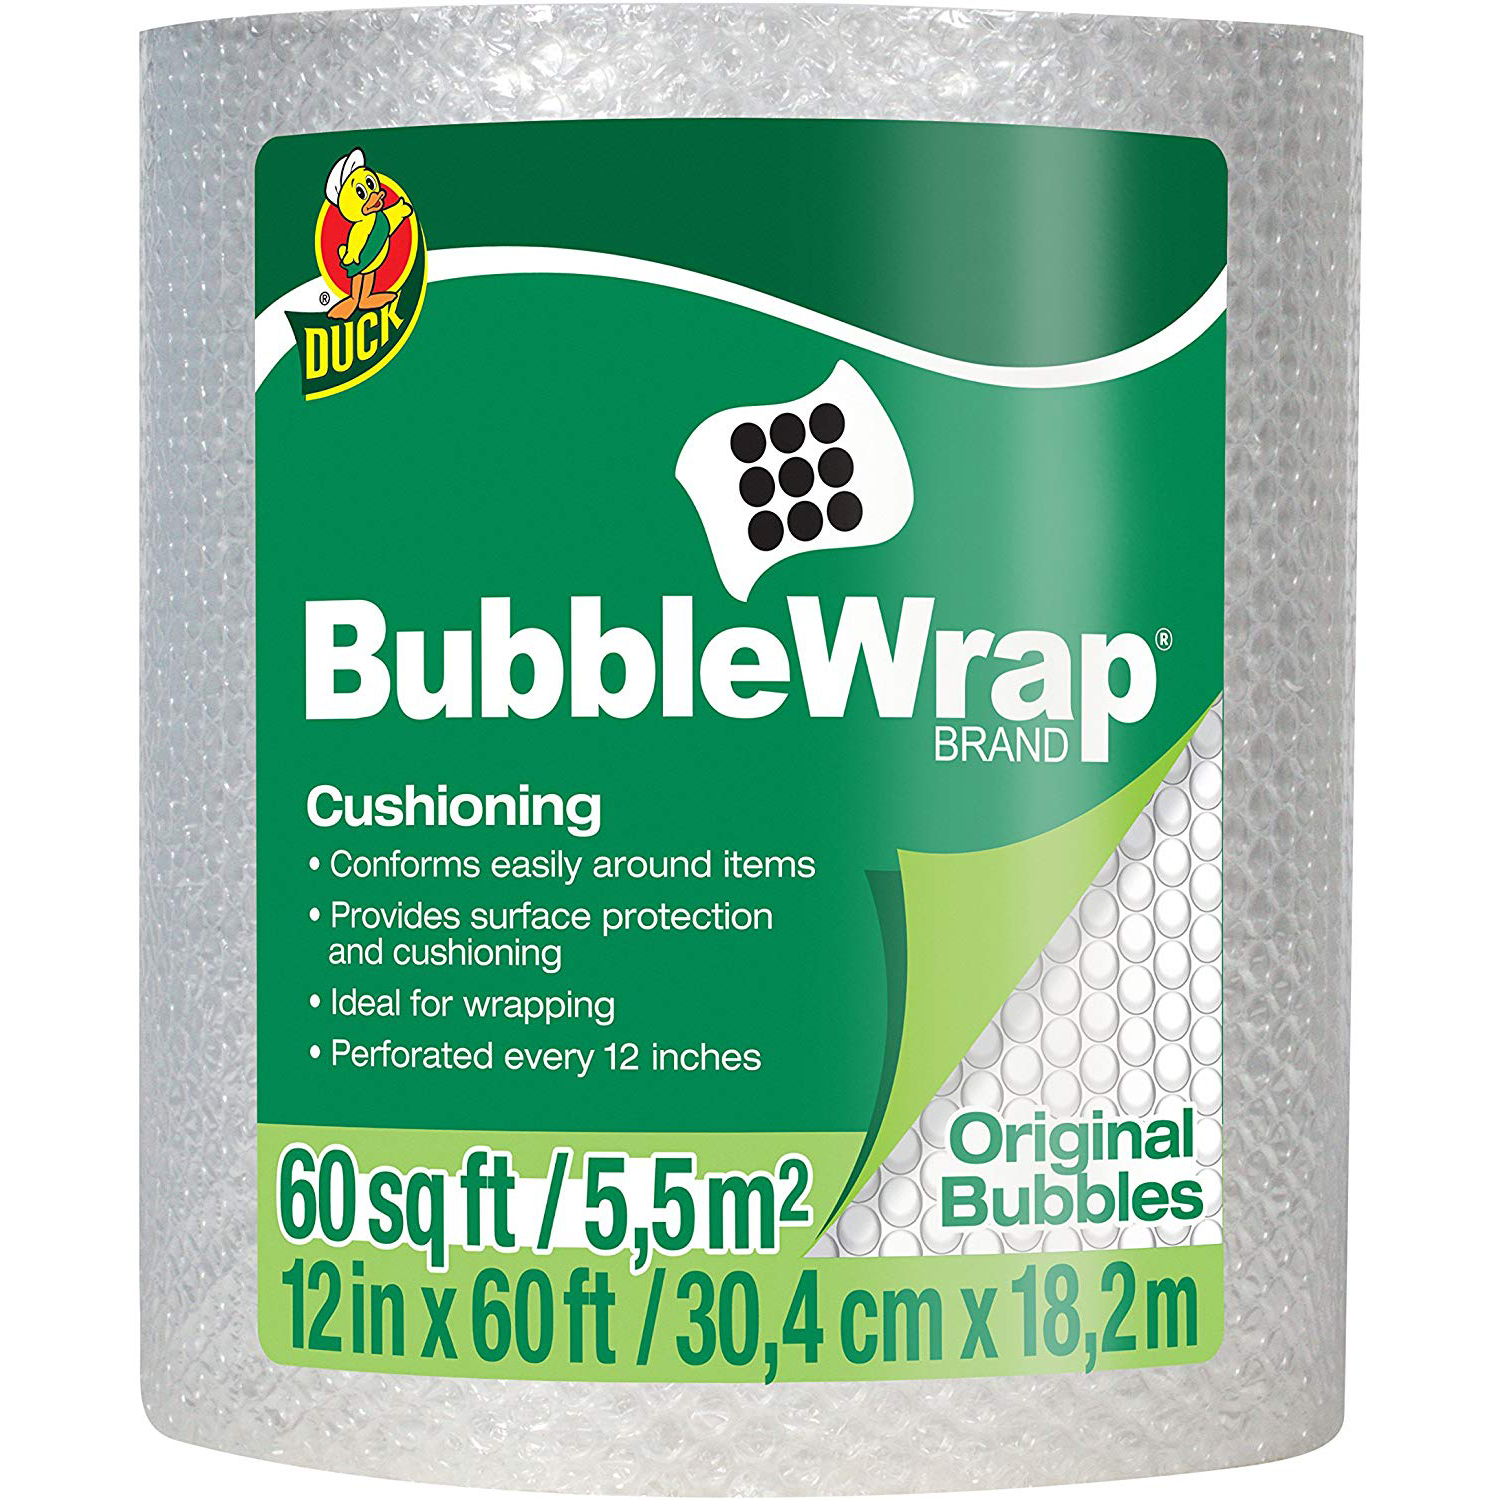 Duck Brand Original Bubble Wrap Cushioning [3/16 inch bubbles]